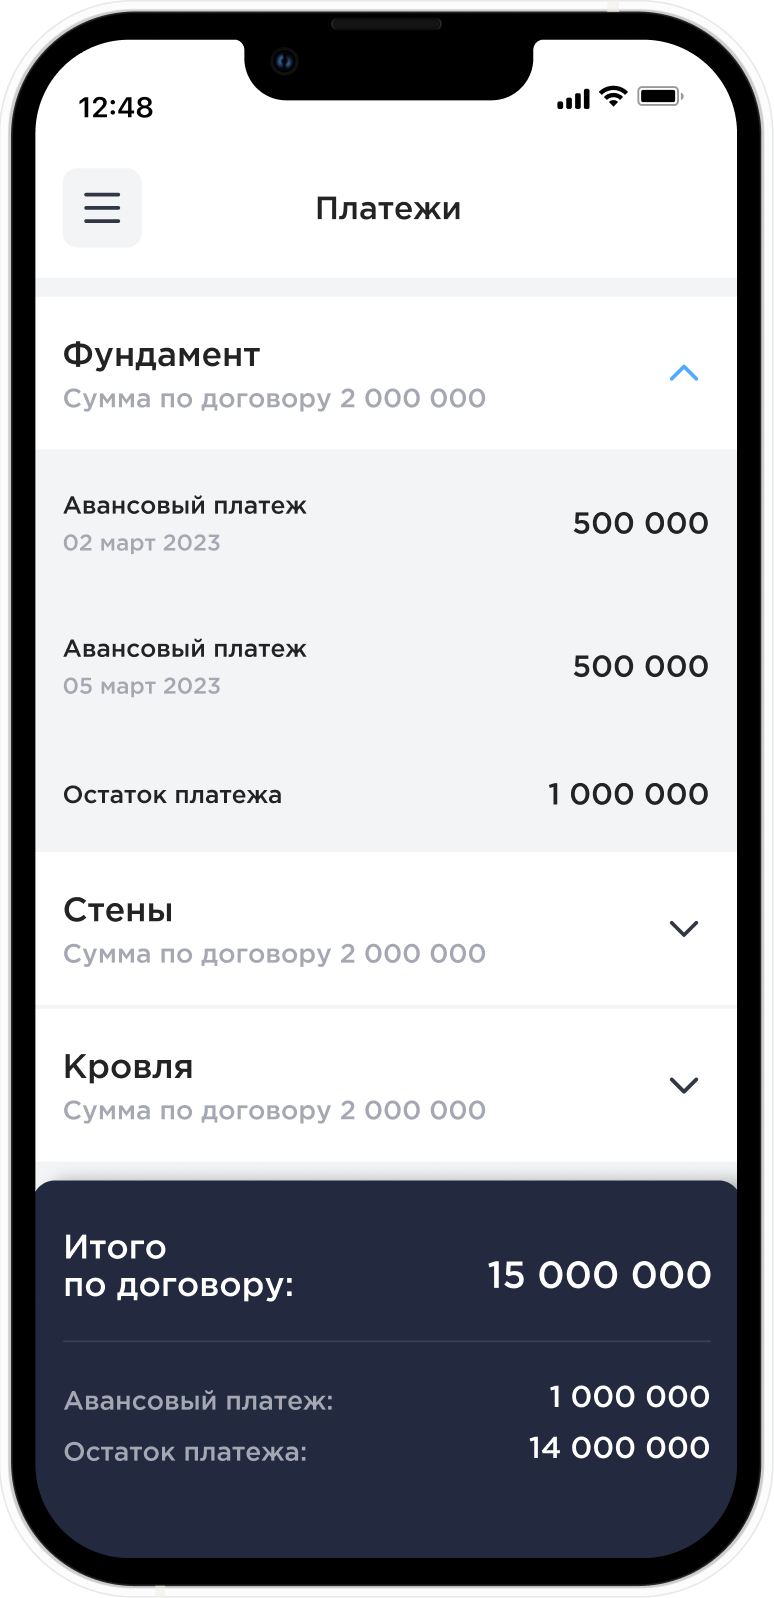 mobile-application-screen-2